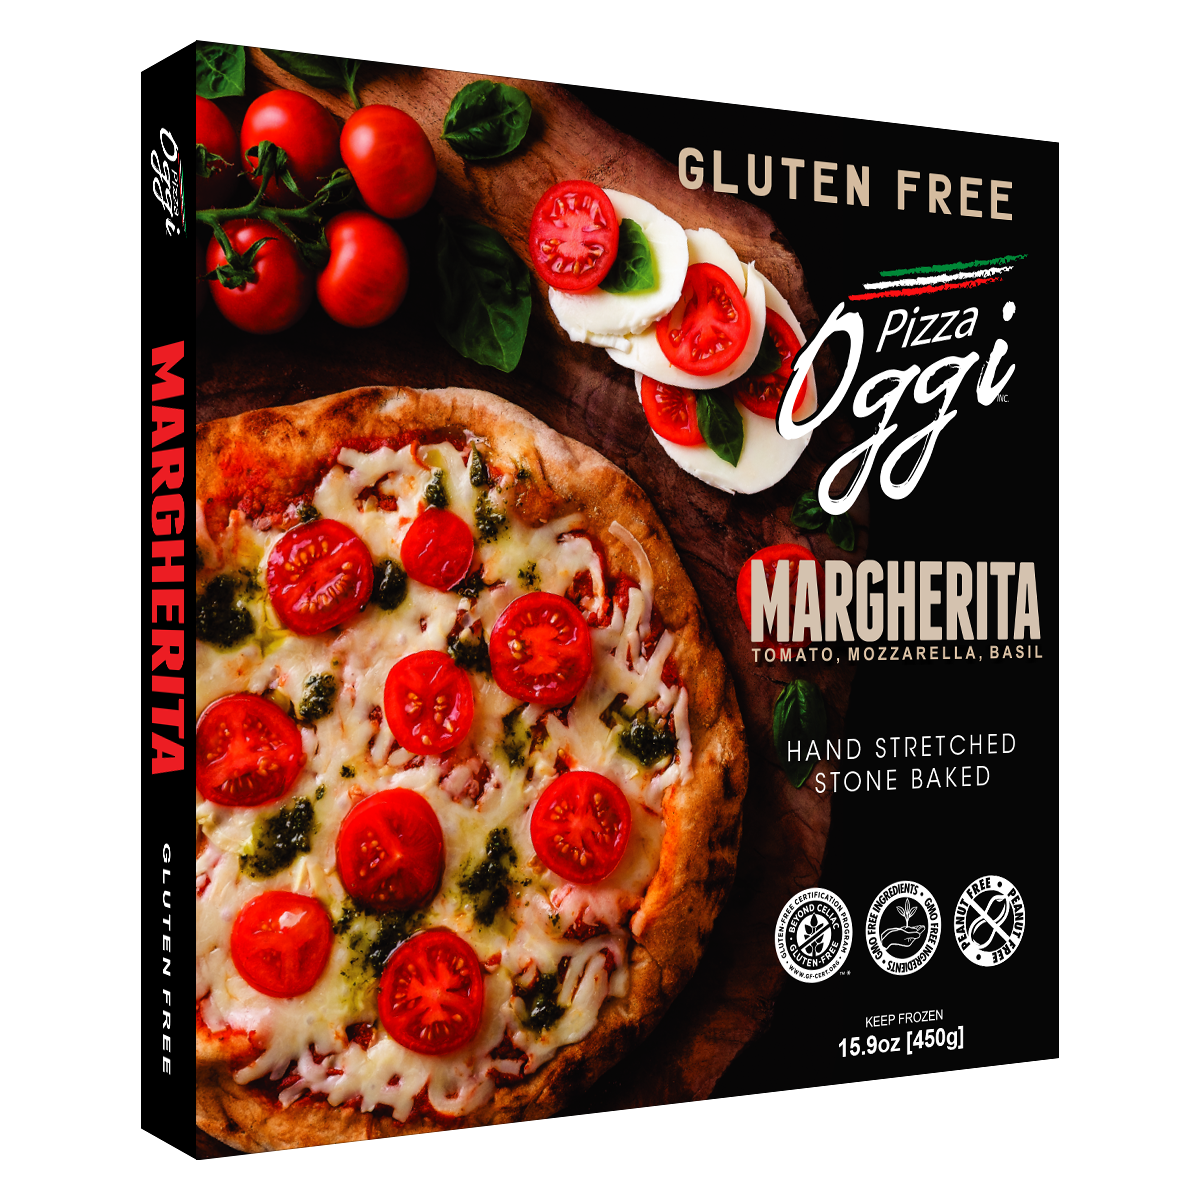 MARGHERITA GLUTEN FREE PIZZA product image